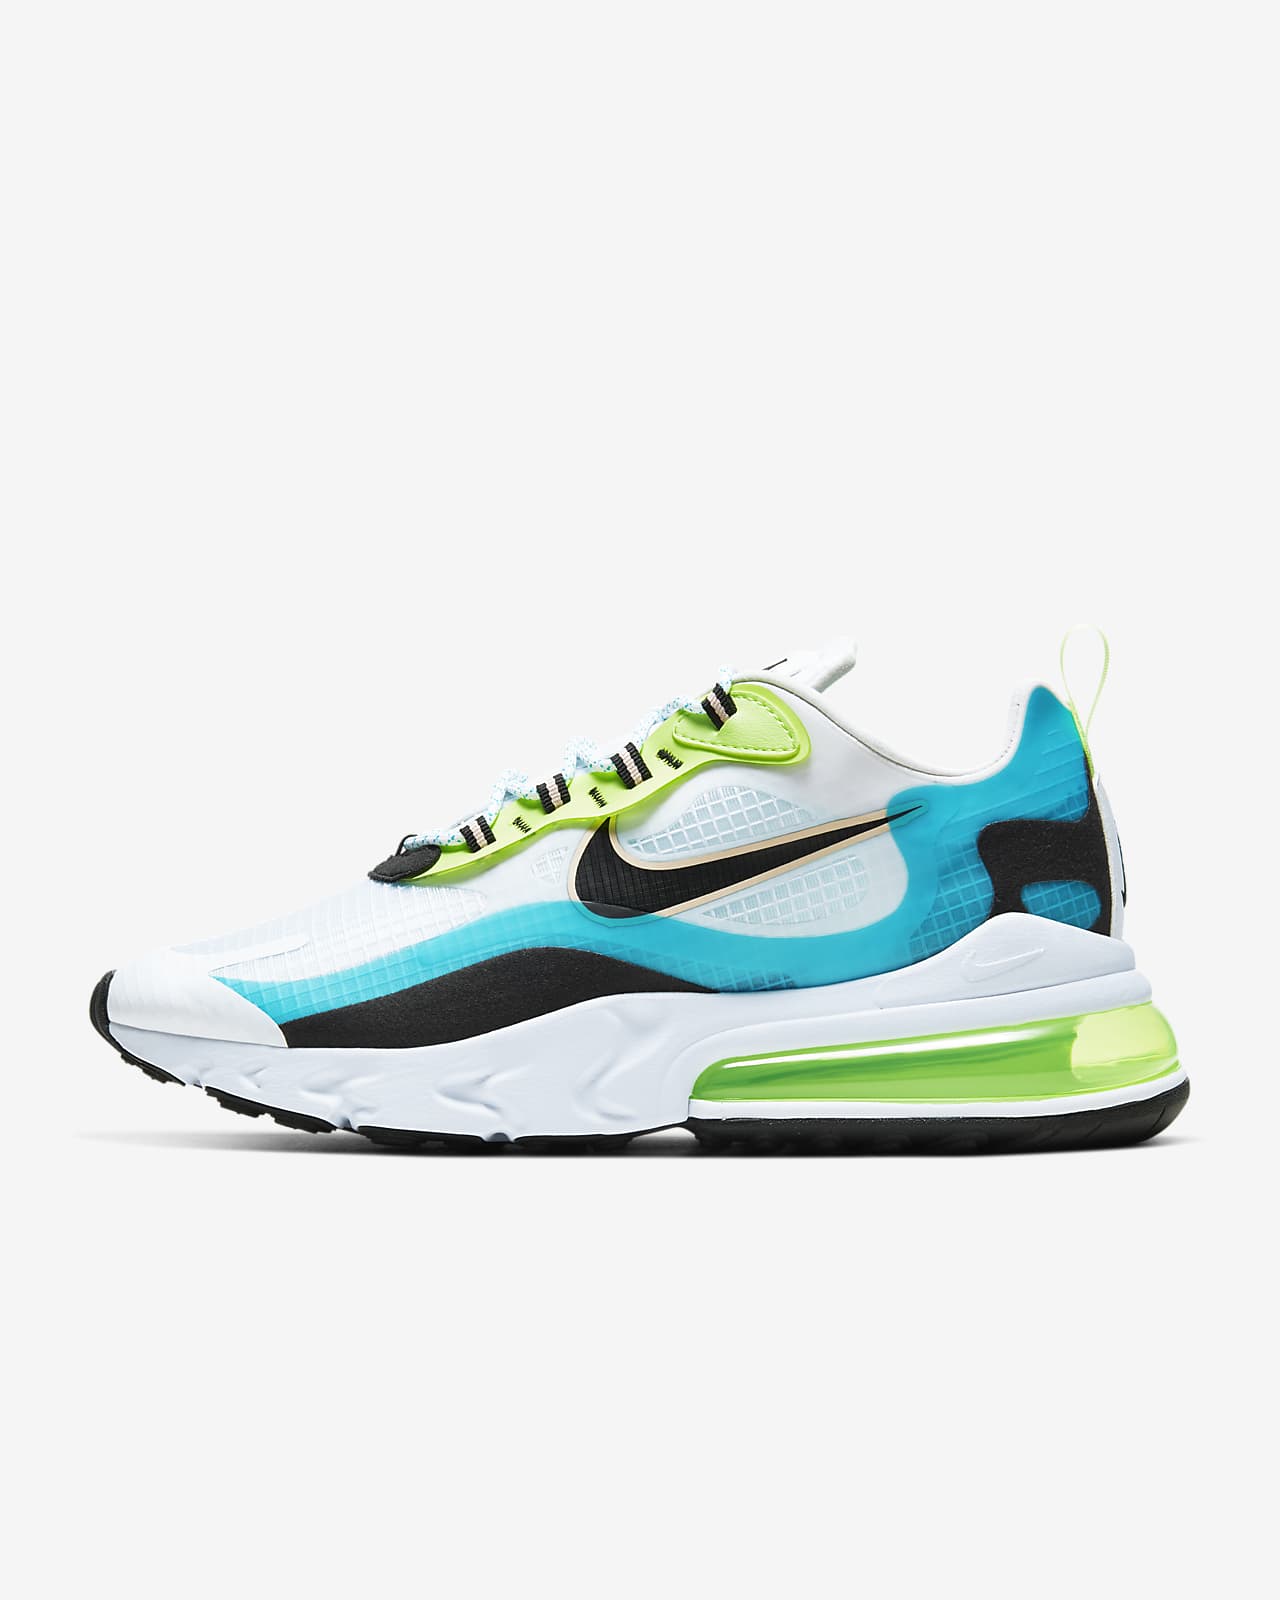 Nike Air Max 270 React SE Men's Shoe. Nike BG